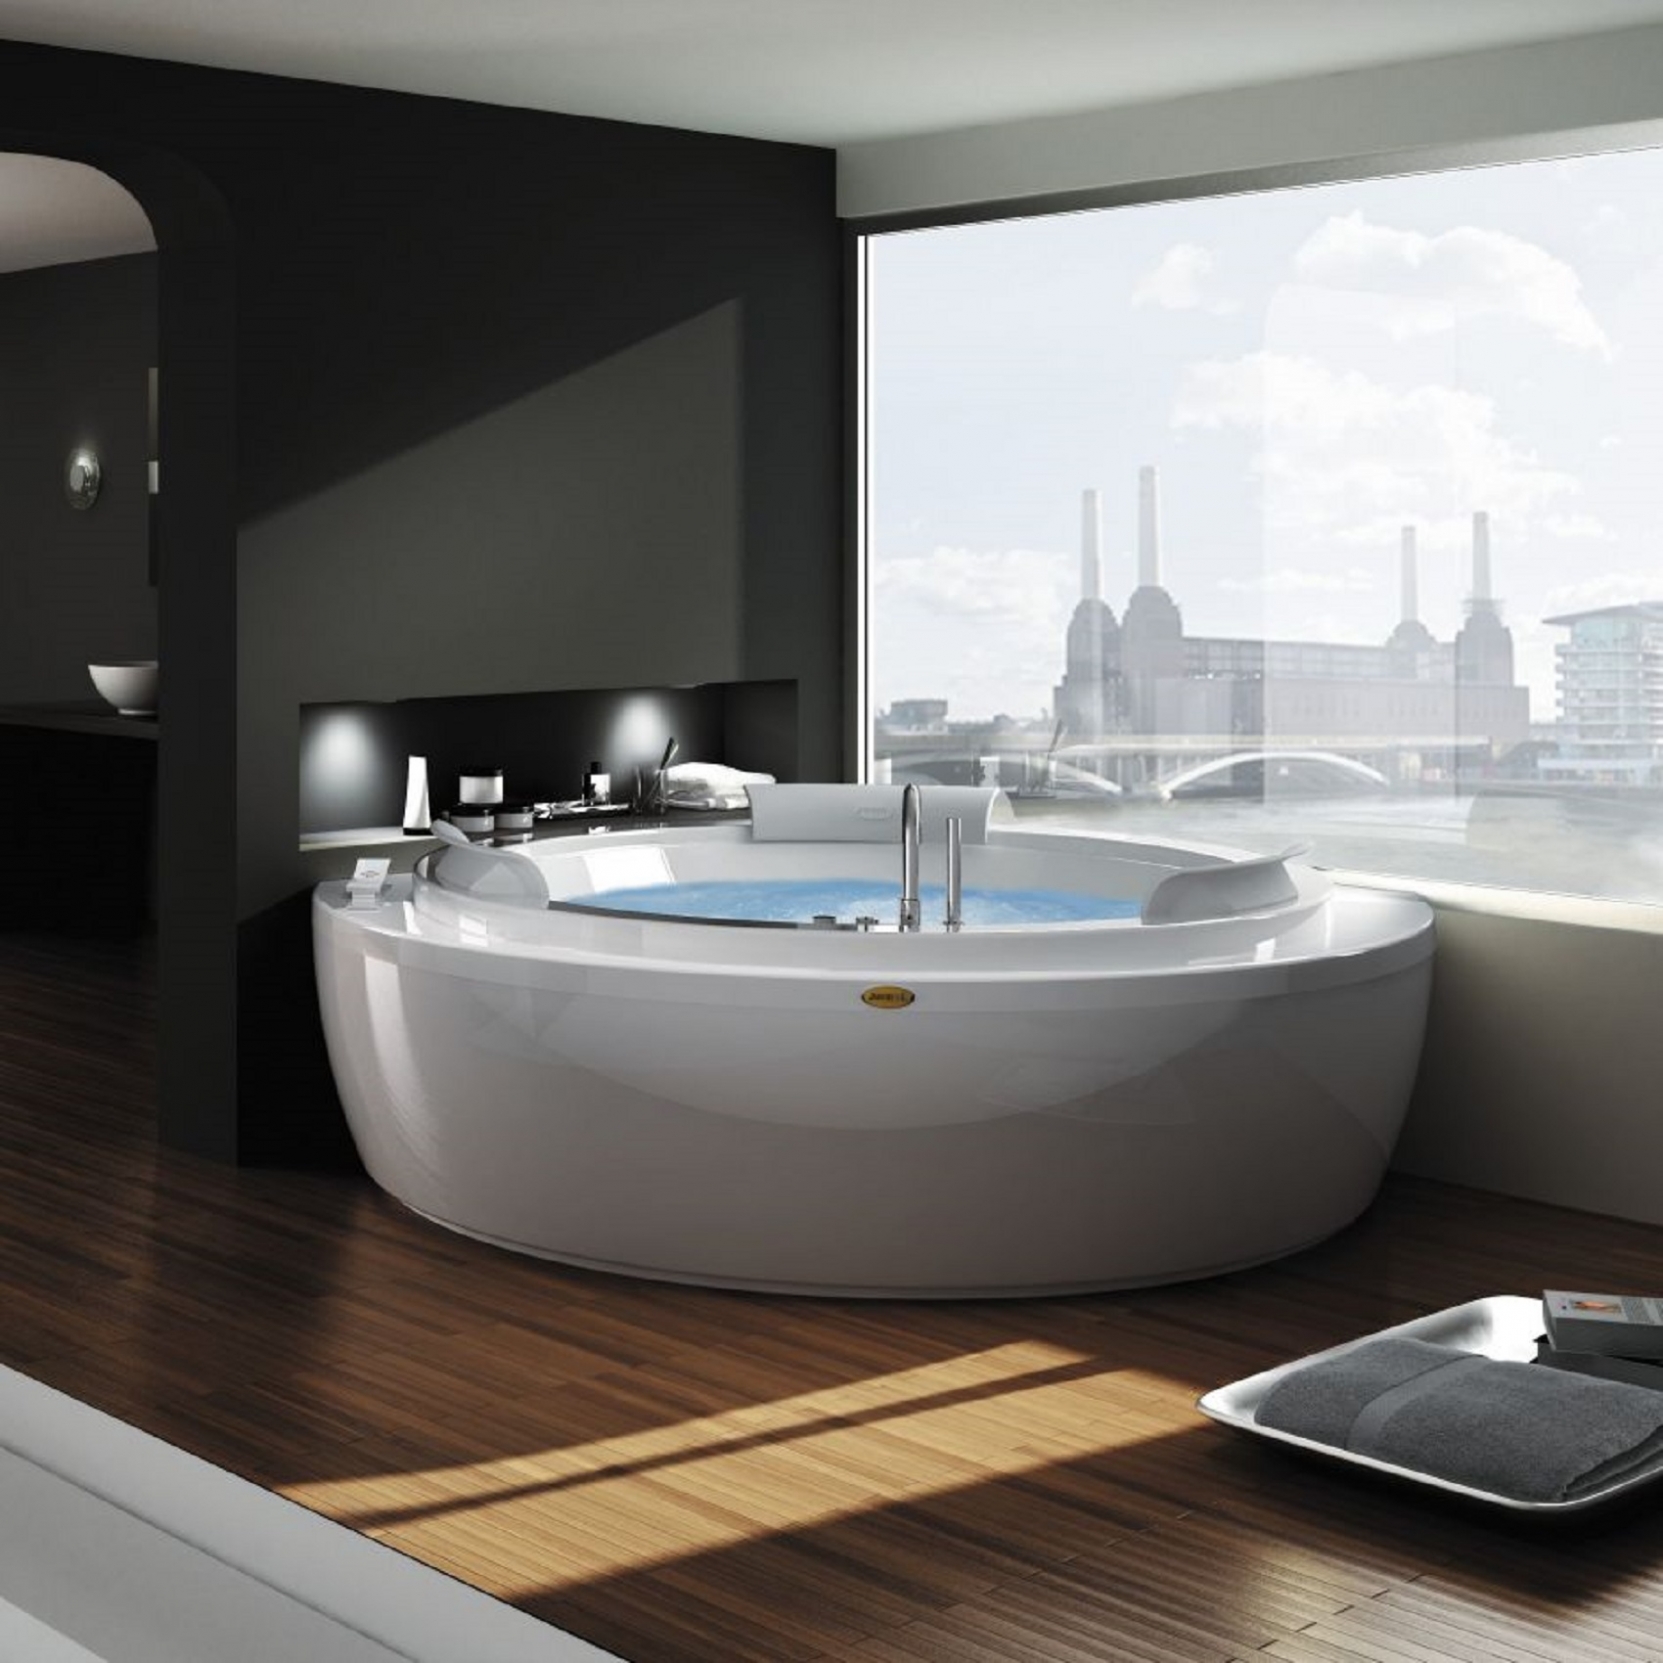 Bathroom Ideas With Corner Jacuzzi Best Home Design Ideas